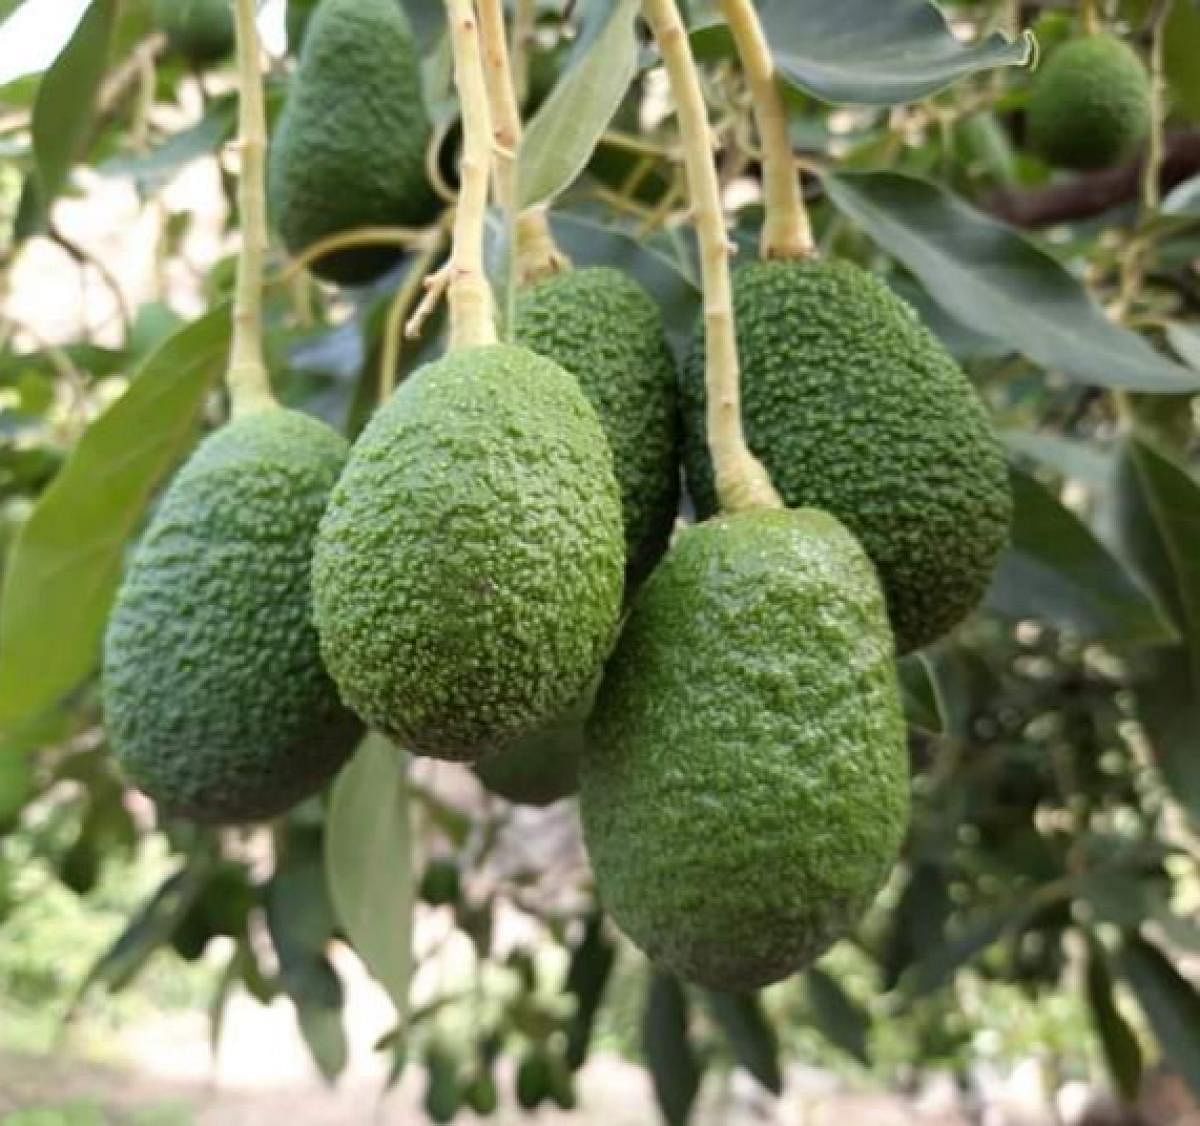  The high-yielding Hass avocado.